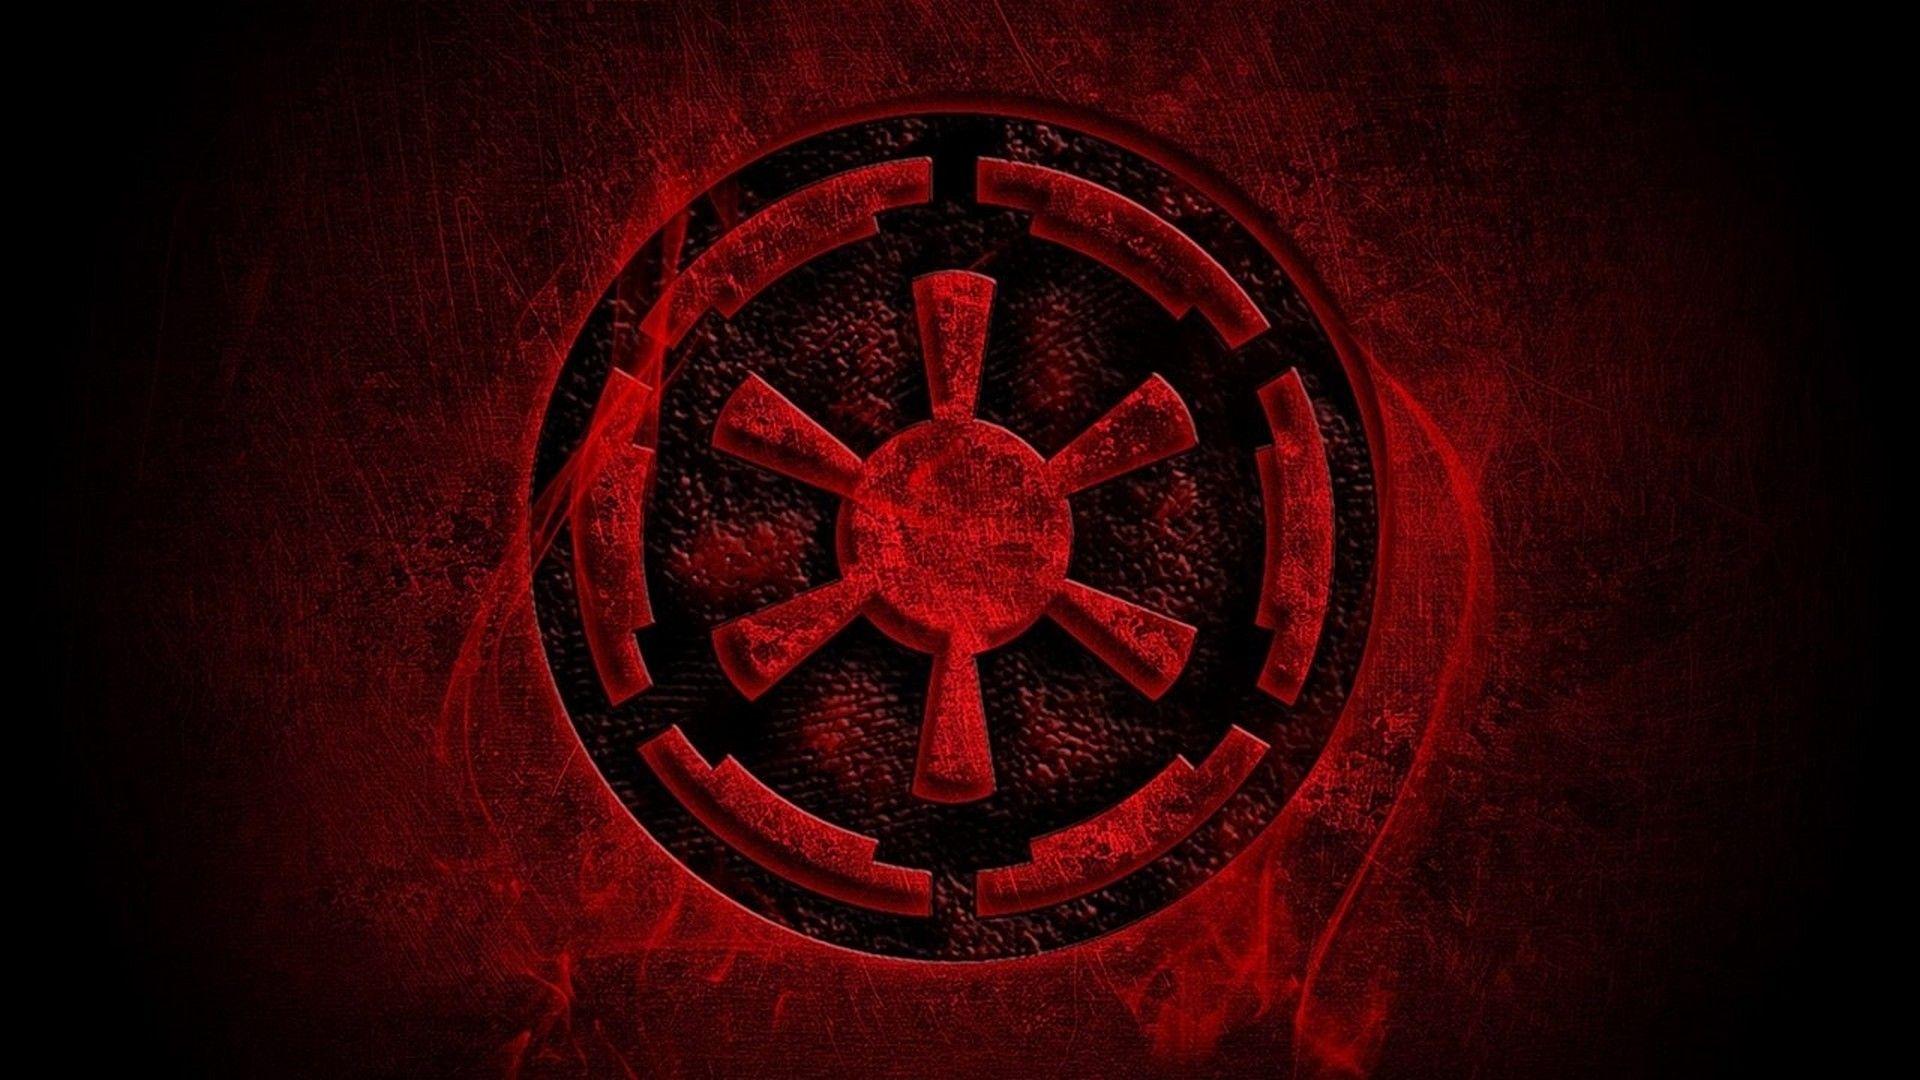 Star Wars Galactic Empire Logo Wallpaper Live Wallpaper HD. Star wars background, Star wars image, Dark side star wars